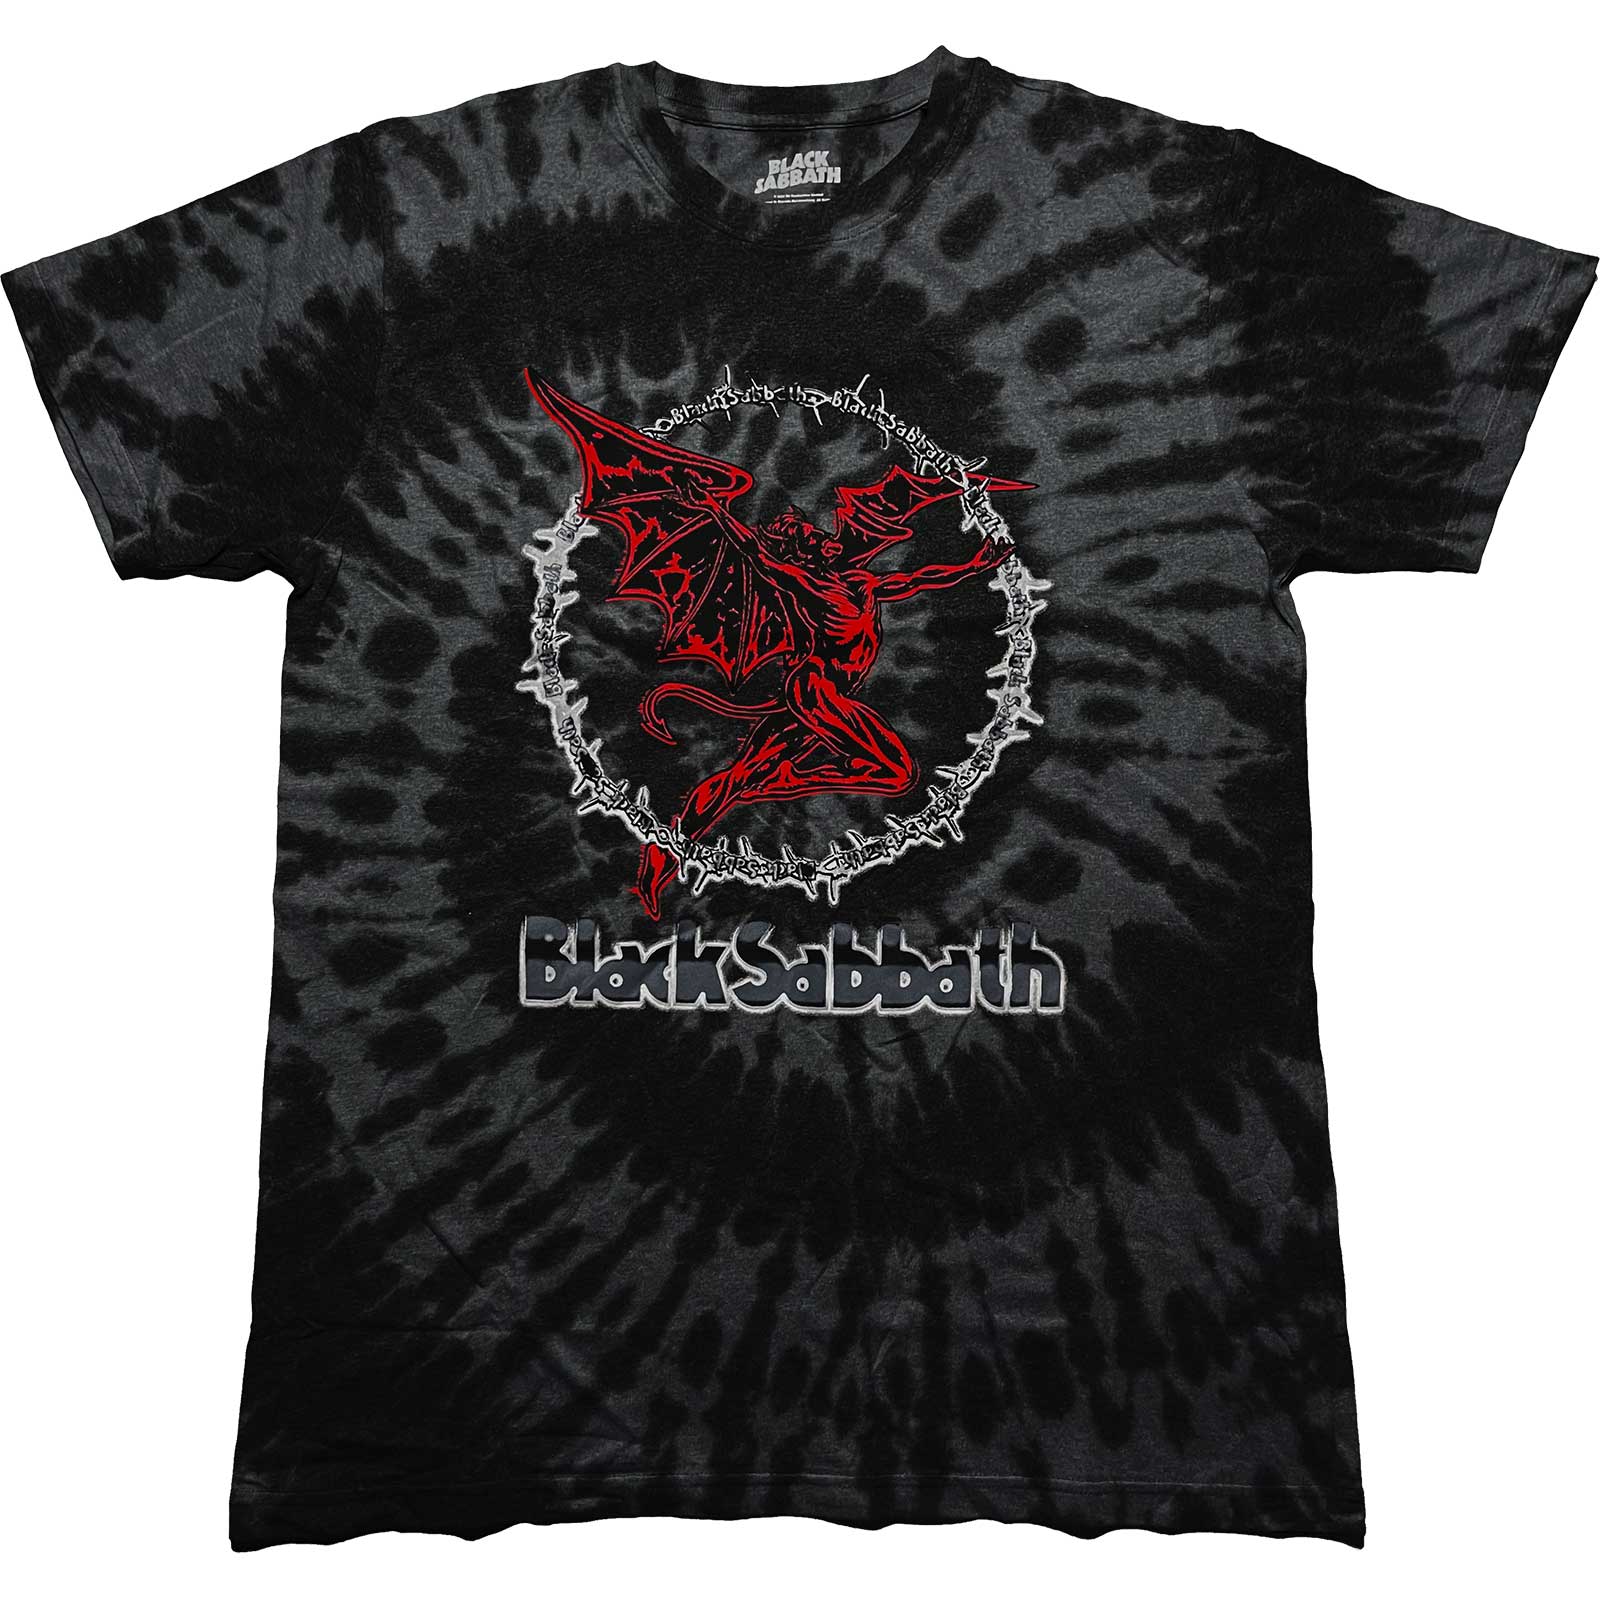 Tshirt Black Sabbath Red Henry-hotRAGS.com